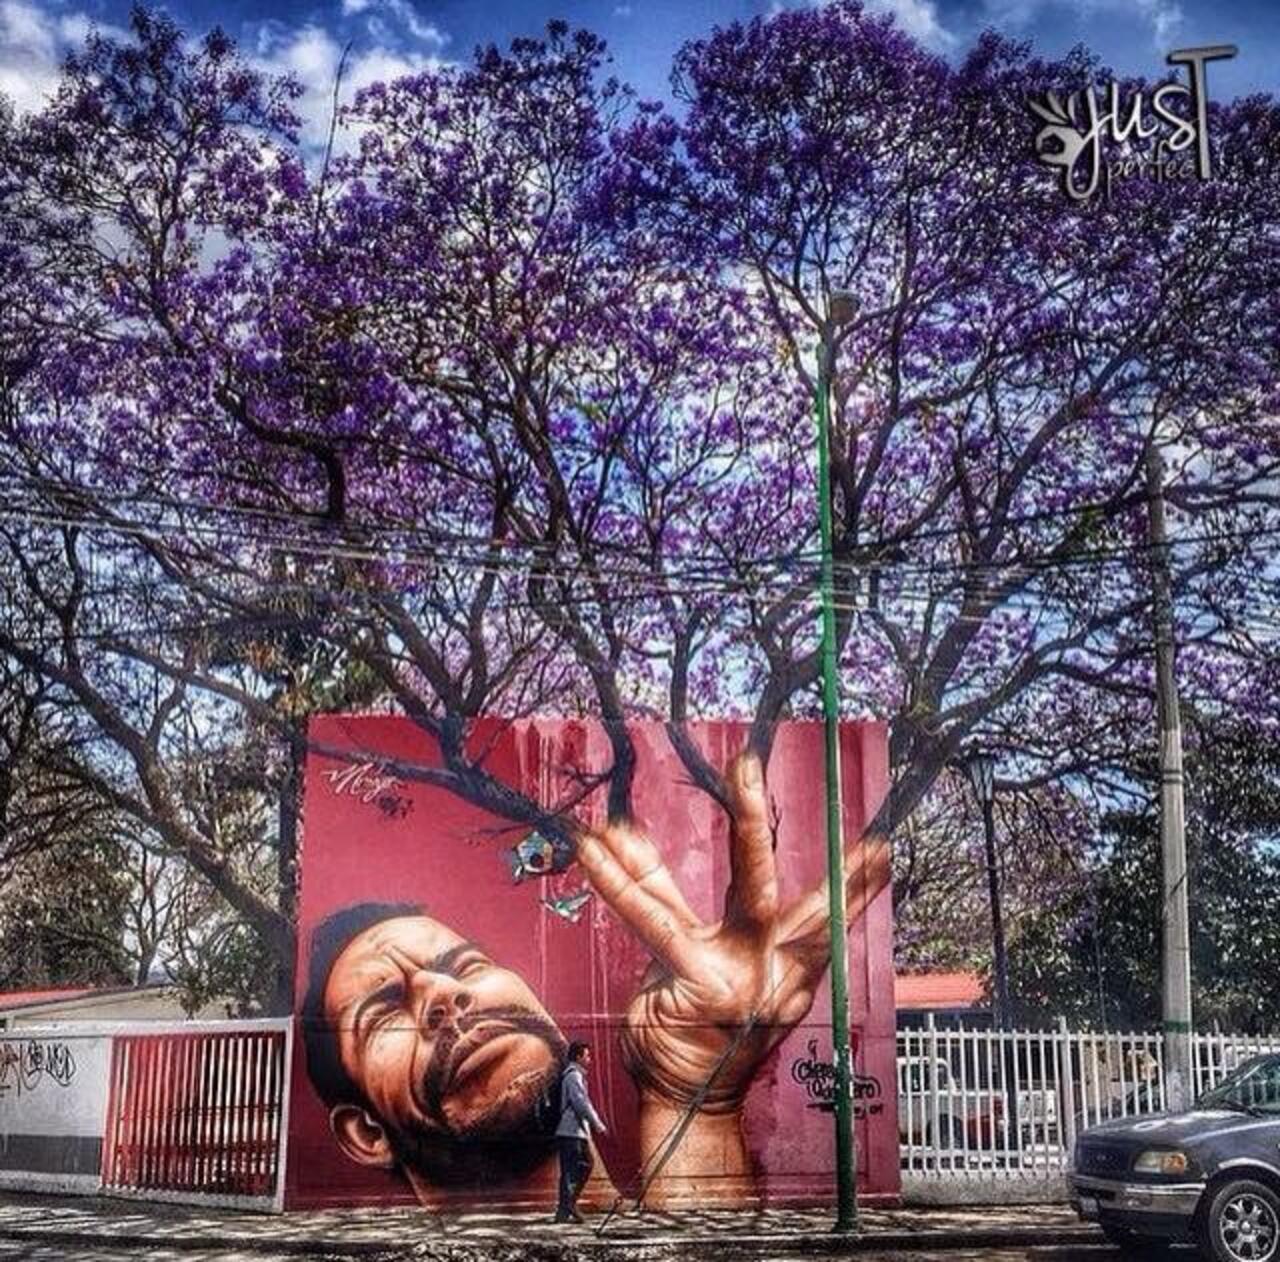 When Street Art meets nature

Work by Jose Luis Noriega
#art #arte #graffiti #streetart http://t.co/y5z3zqF9L6 RT @GoogleStreetArt